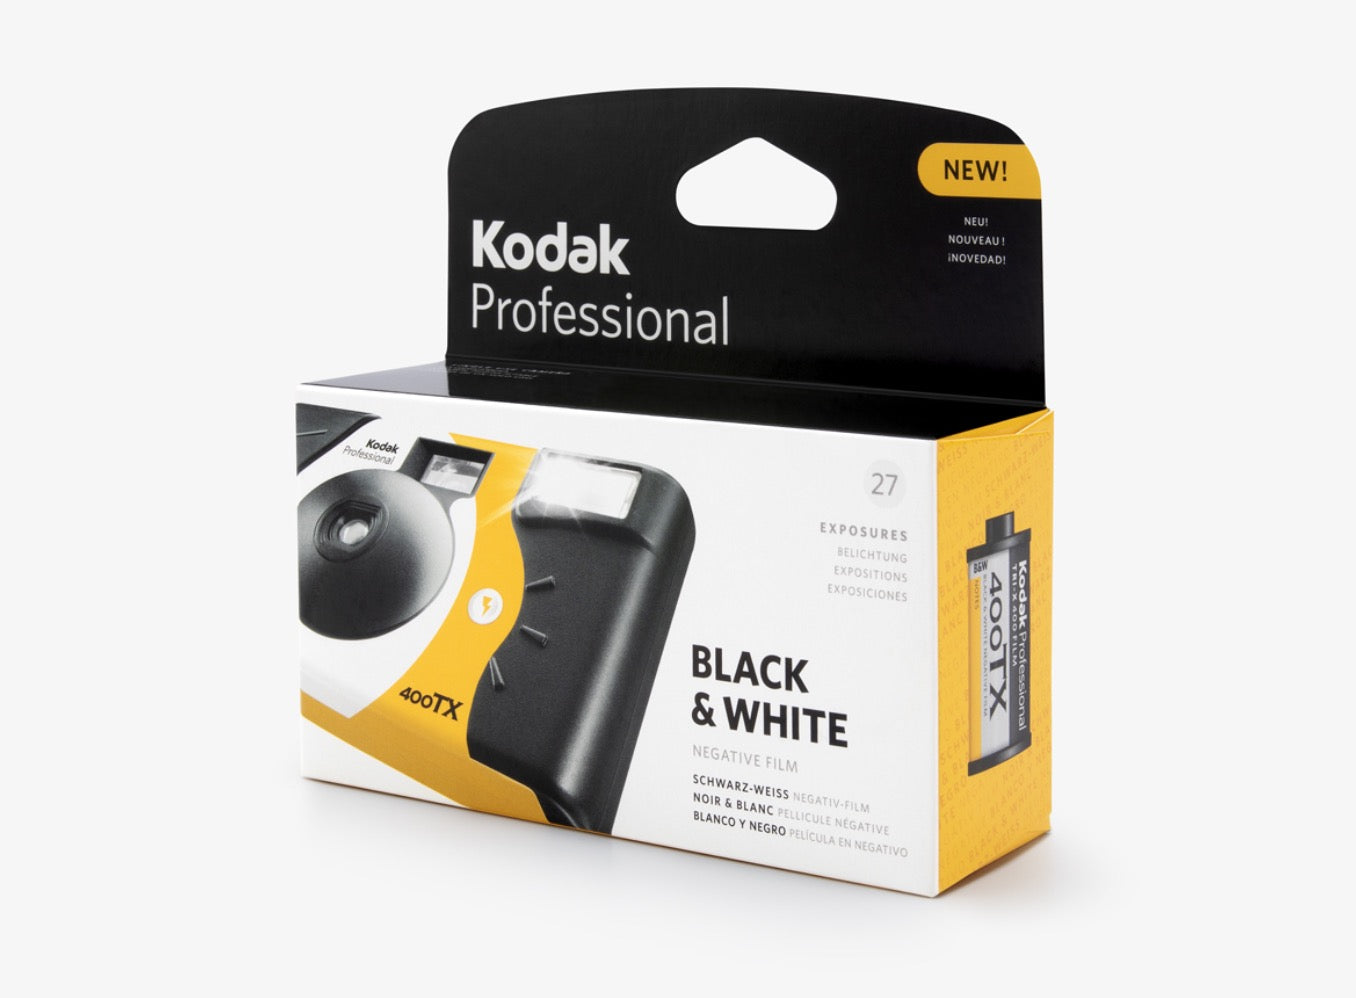 KODAK TRI-X 400 Single Use Camera / 27exp